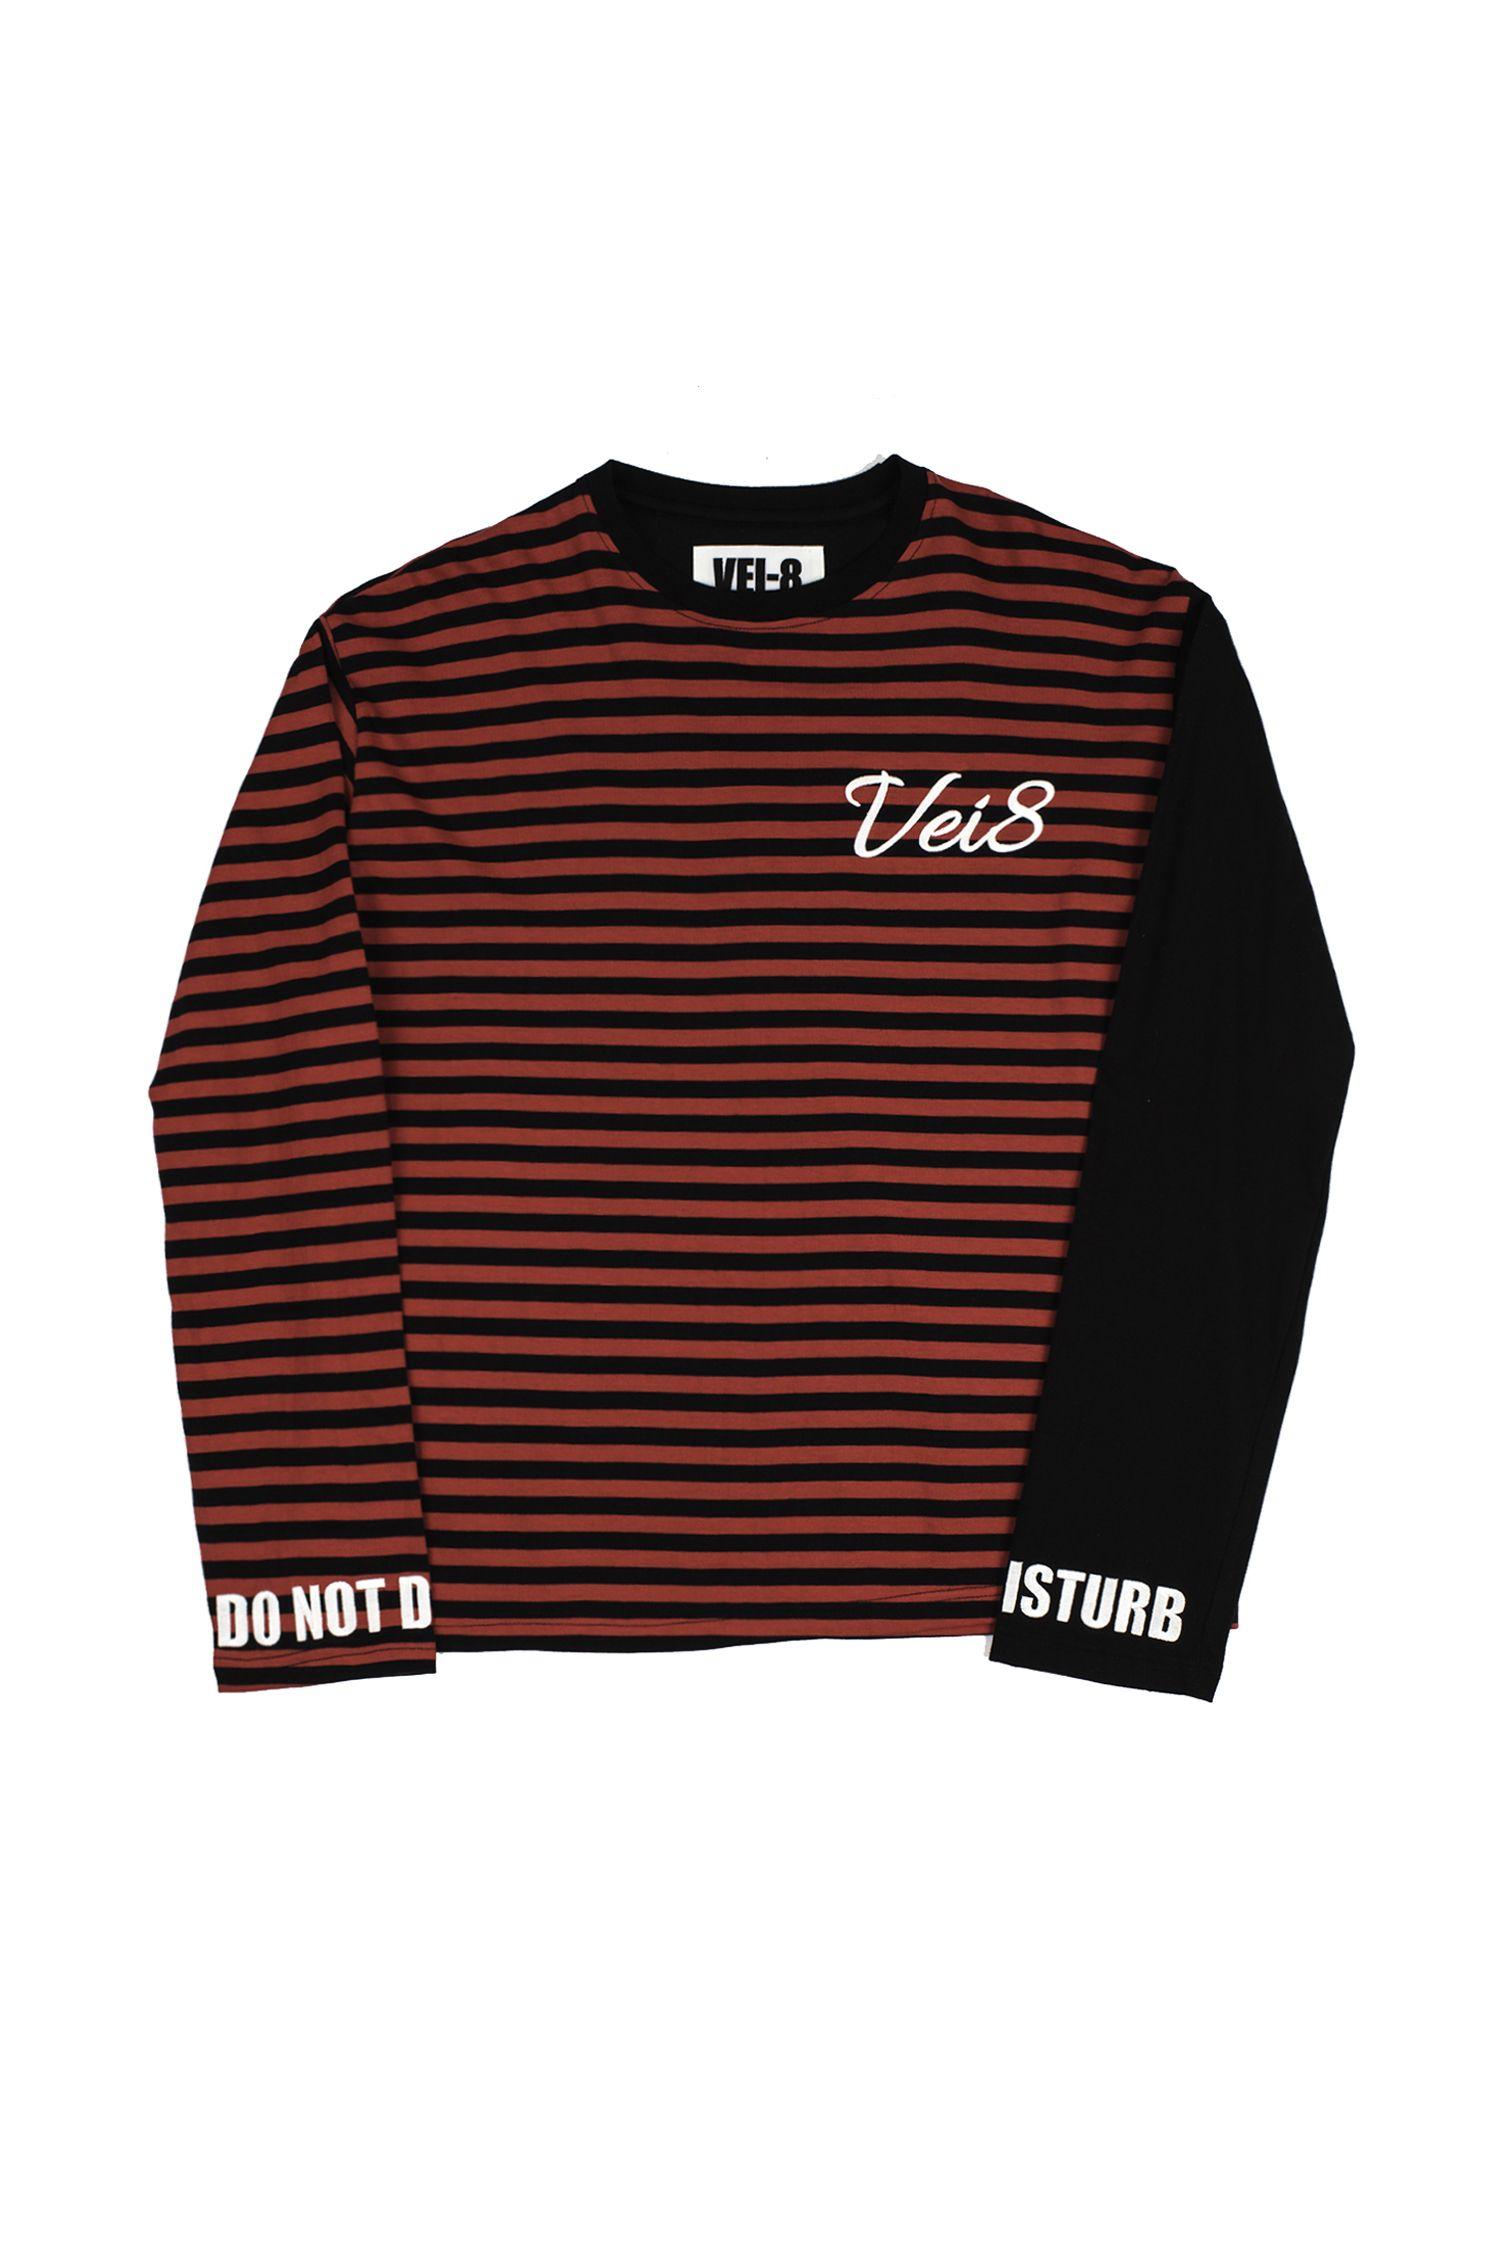 Black Striped Logo - VEI-8 – RED & BLACK STRIPED LOGO T-SHIRT — FIG COLLECTIVE